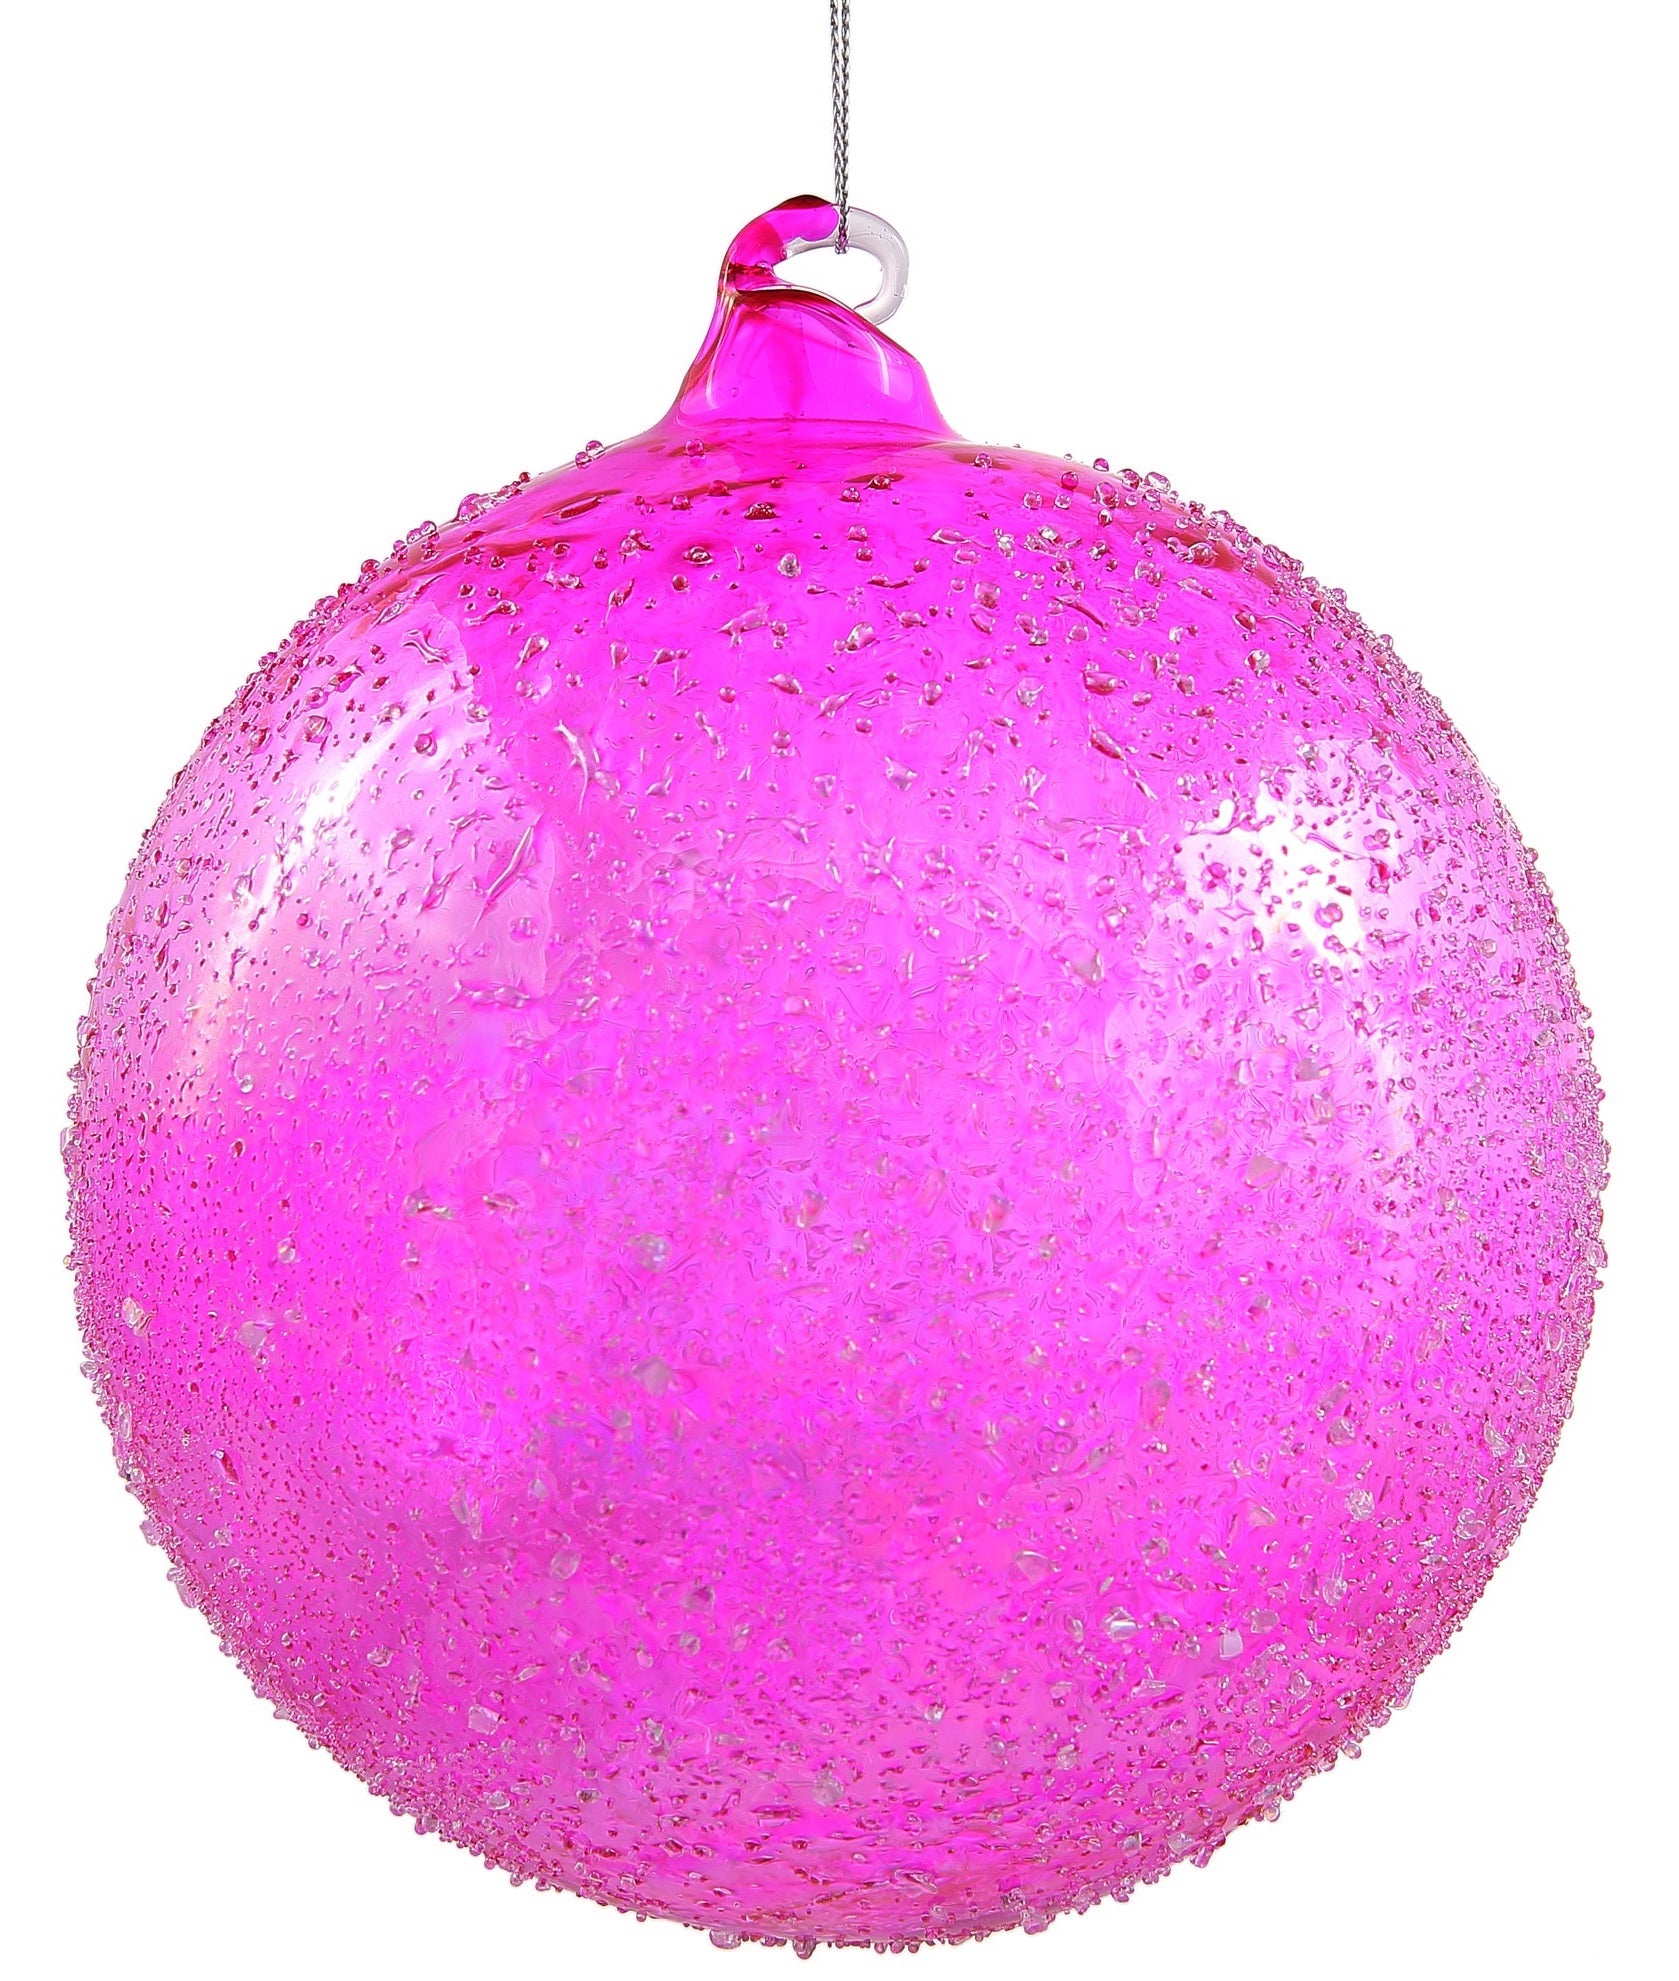 Jim Marvin Fuchsia Beaded Glass Ball Ornaments